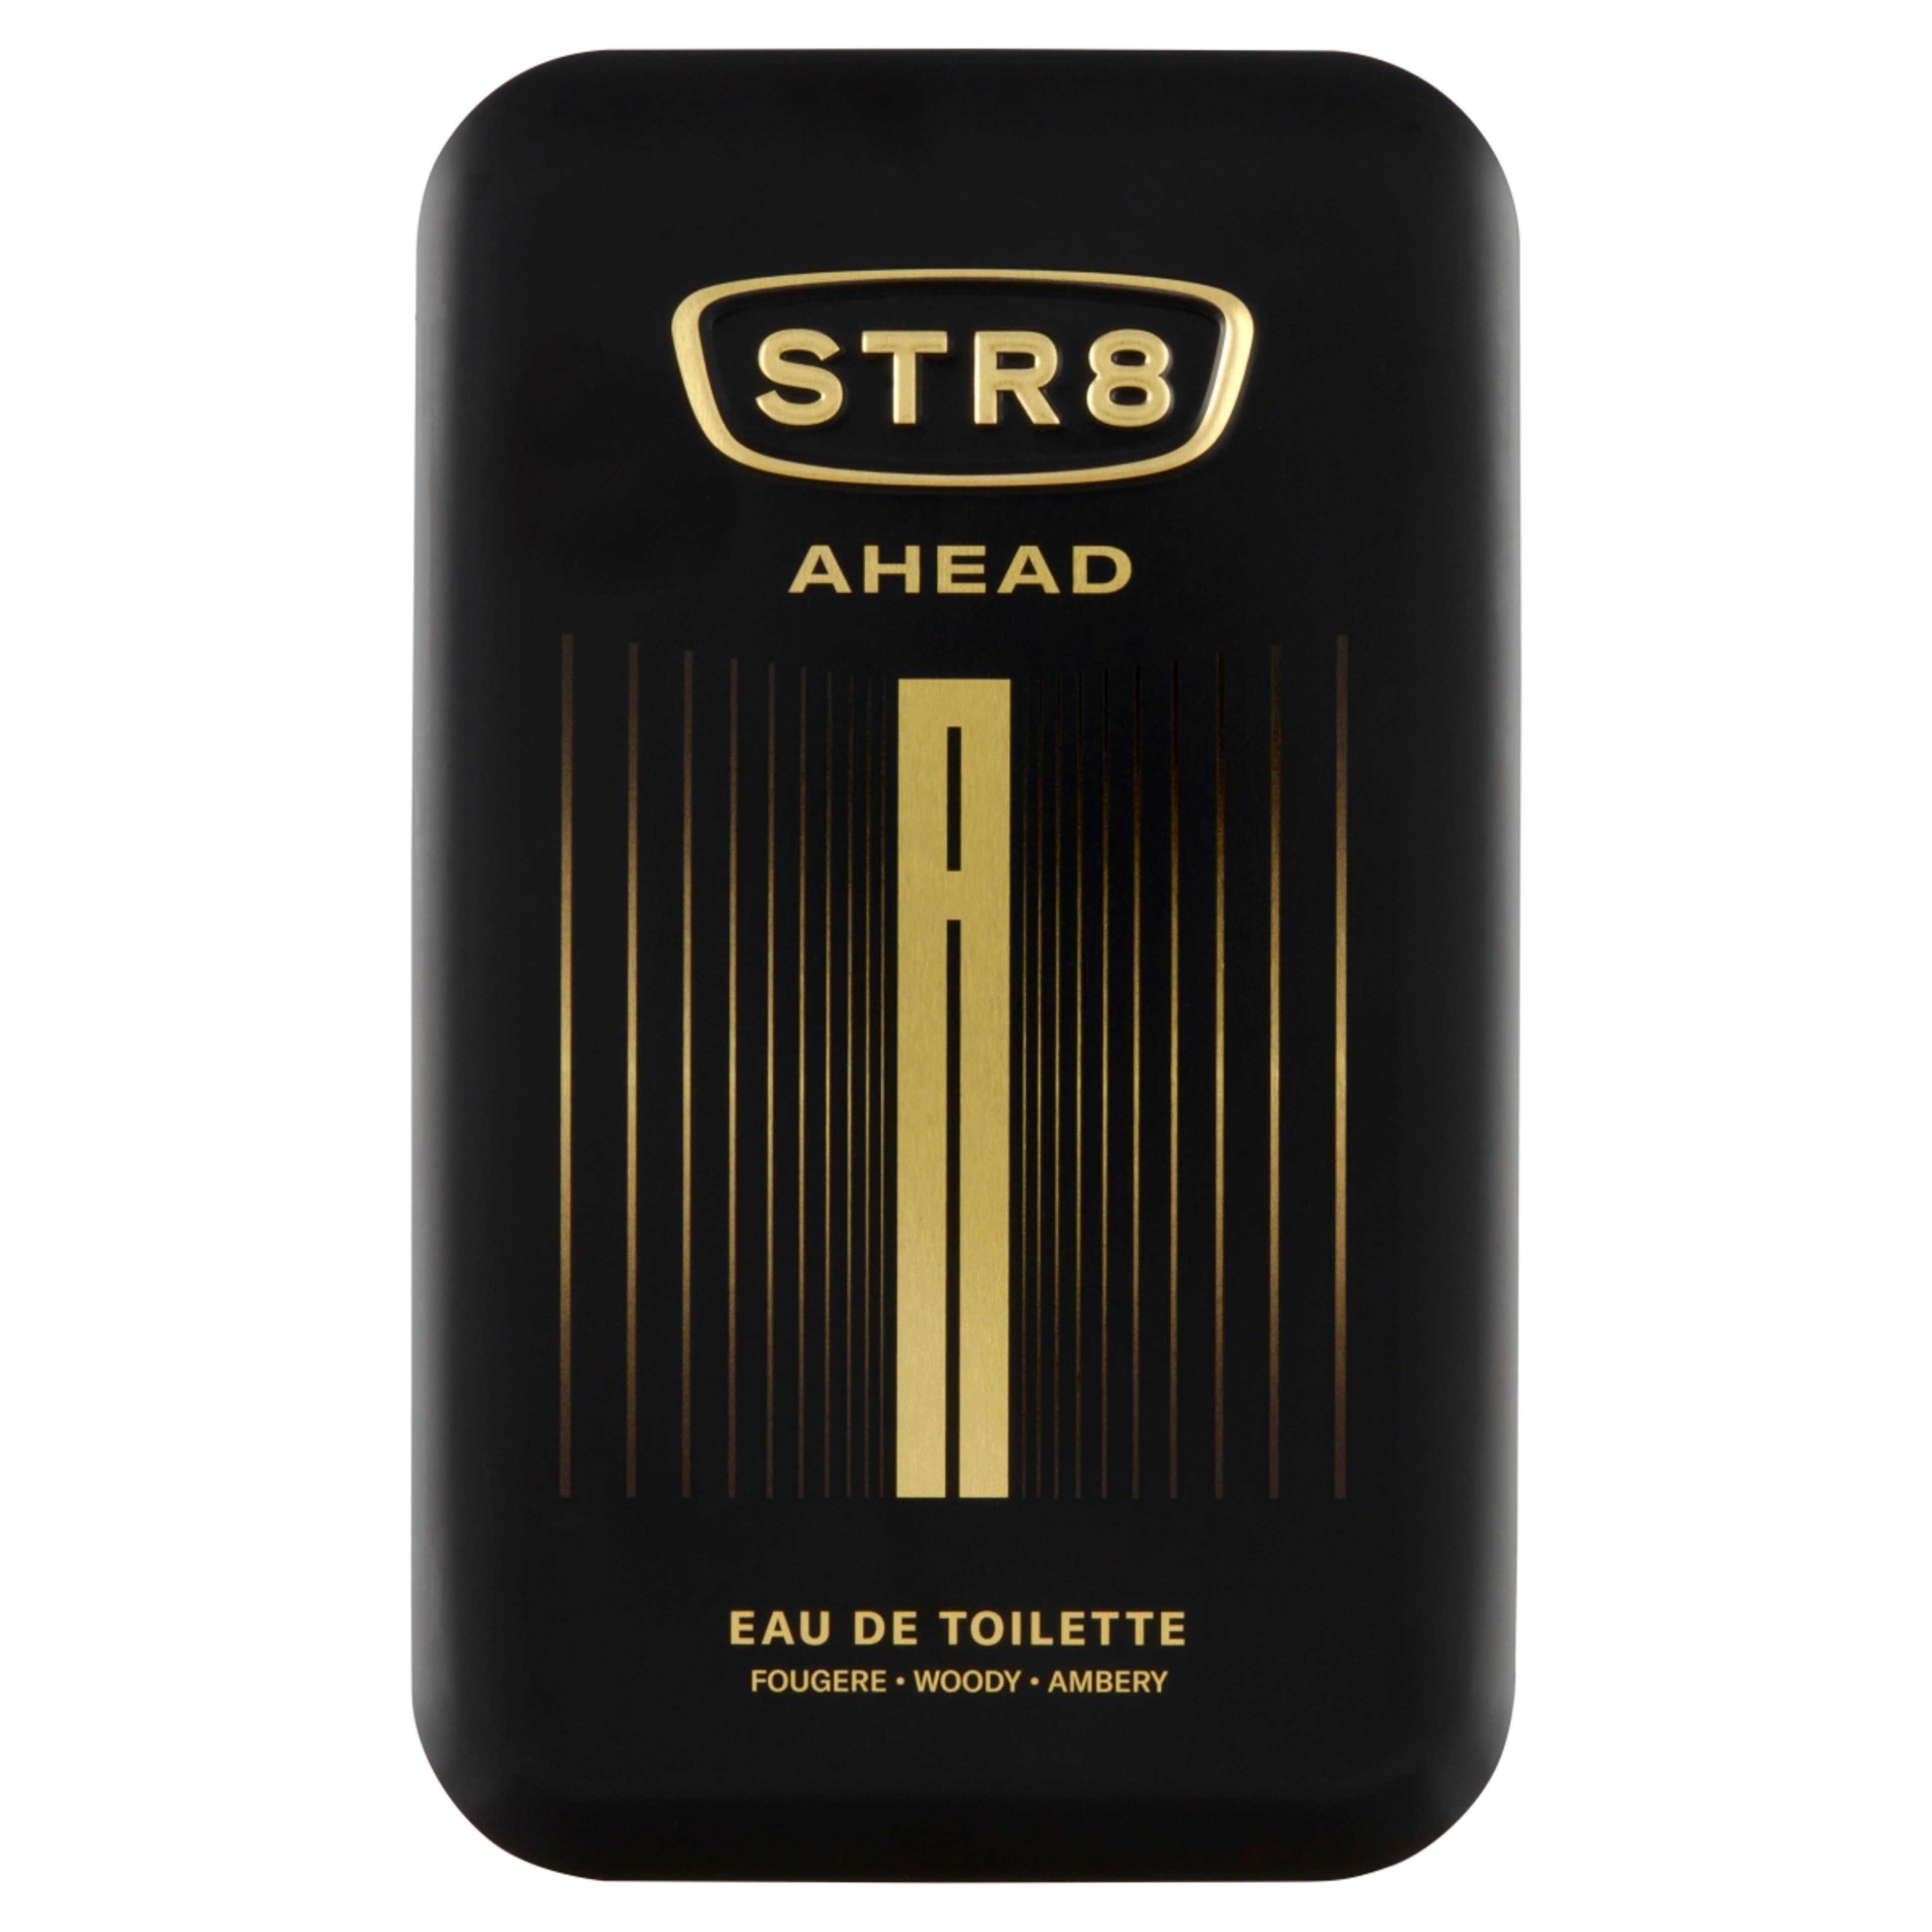 STR8 Ahead eau de toilette - 100 ml-1